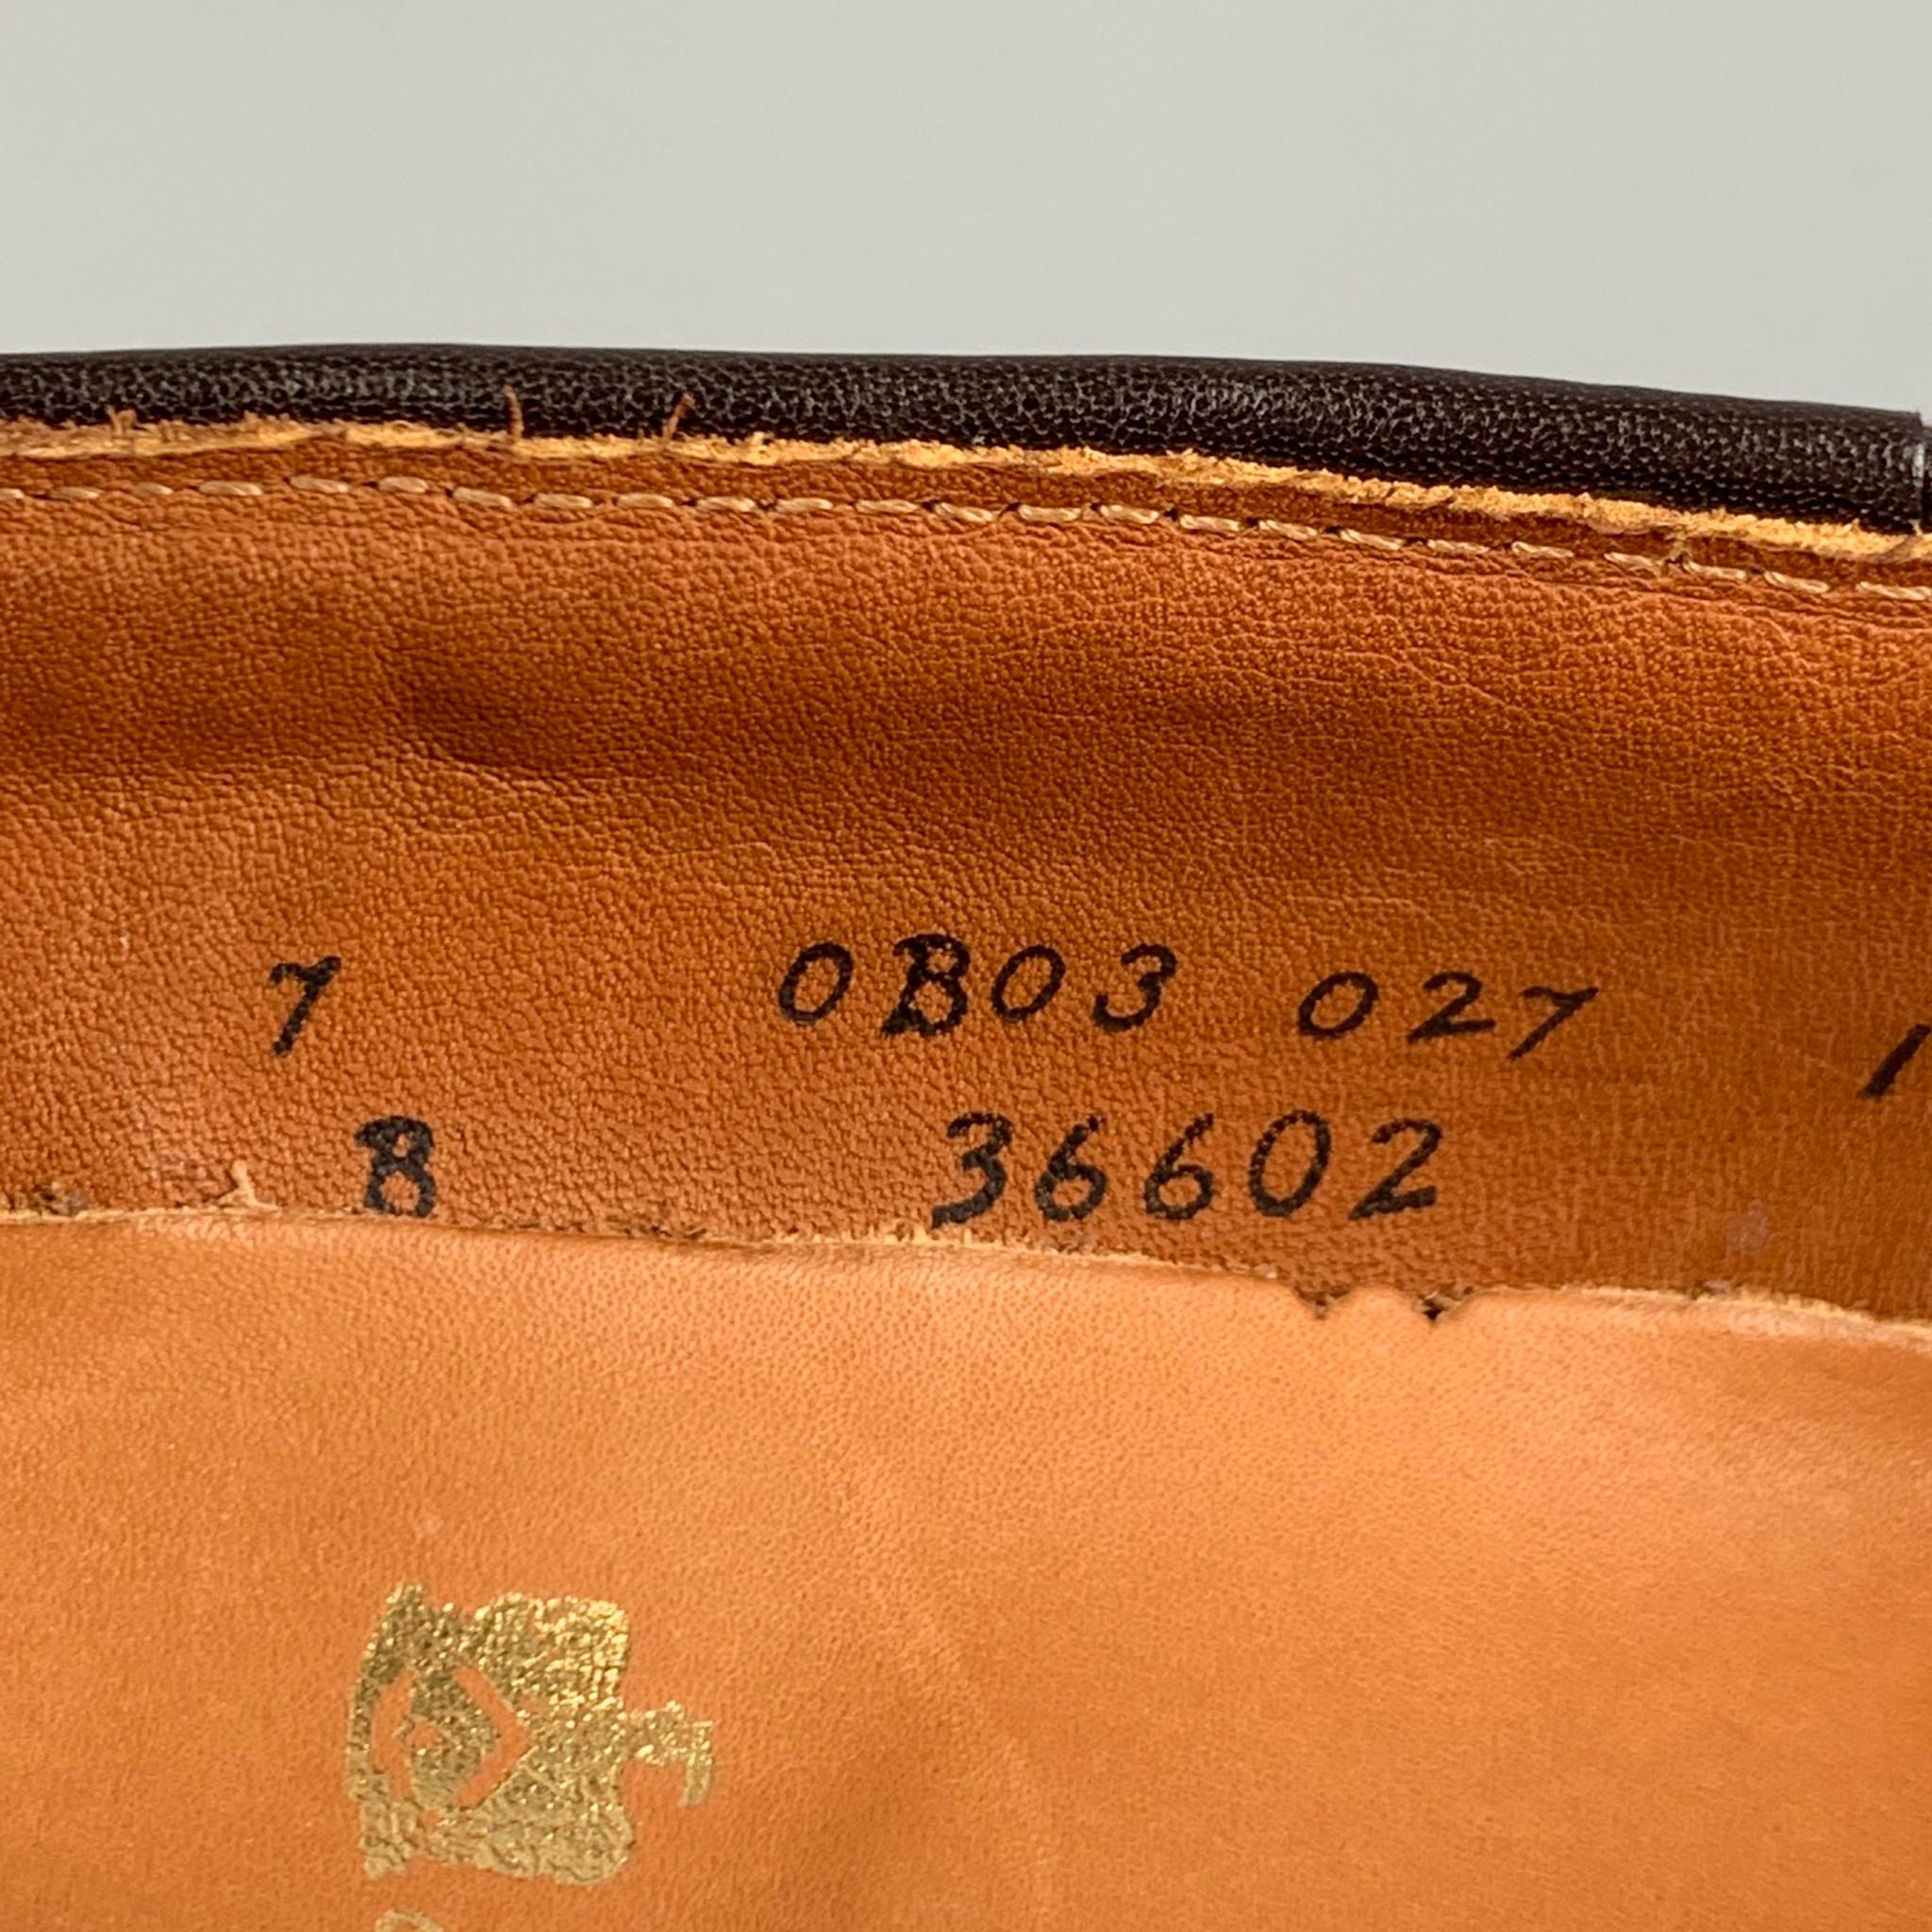 ALDEN Bootmaker Edition Size 7 Brown Leather Tassels Loafers 2